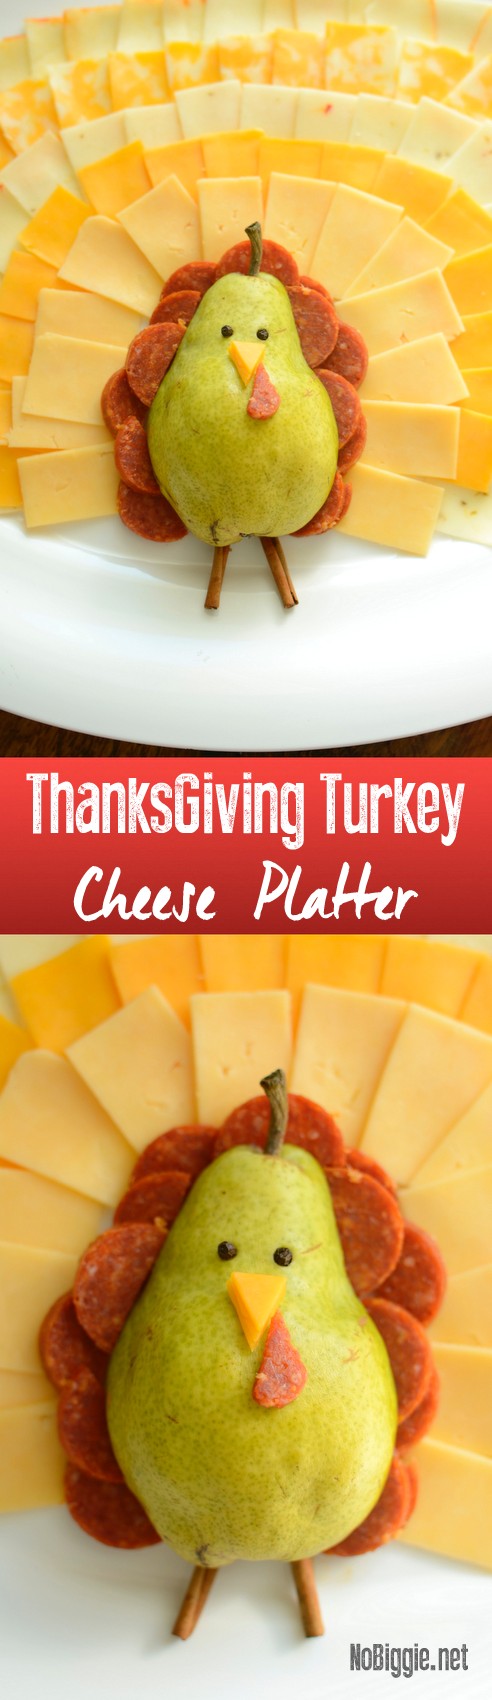 Turkey Cheese platter | NoBiggie.net